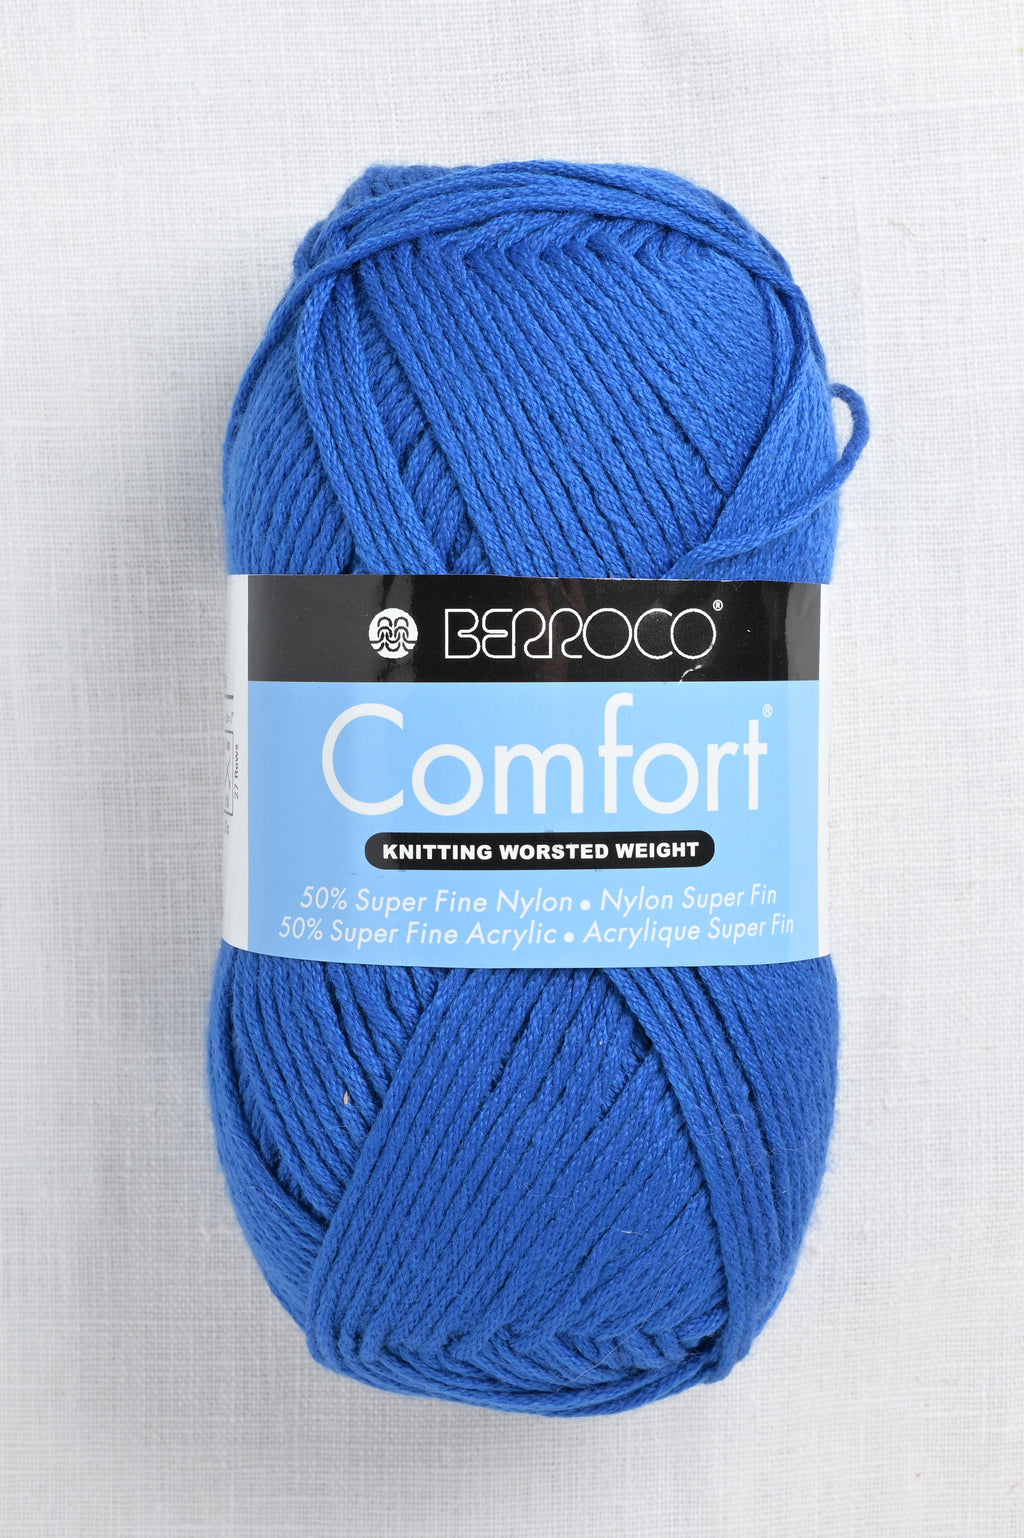 Berroco Comfort Yarn - 9736 Primary Blue